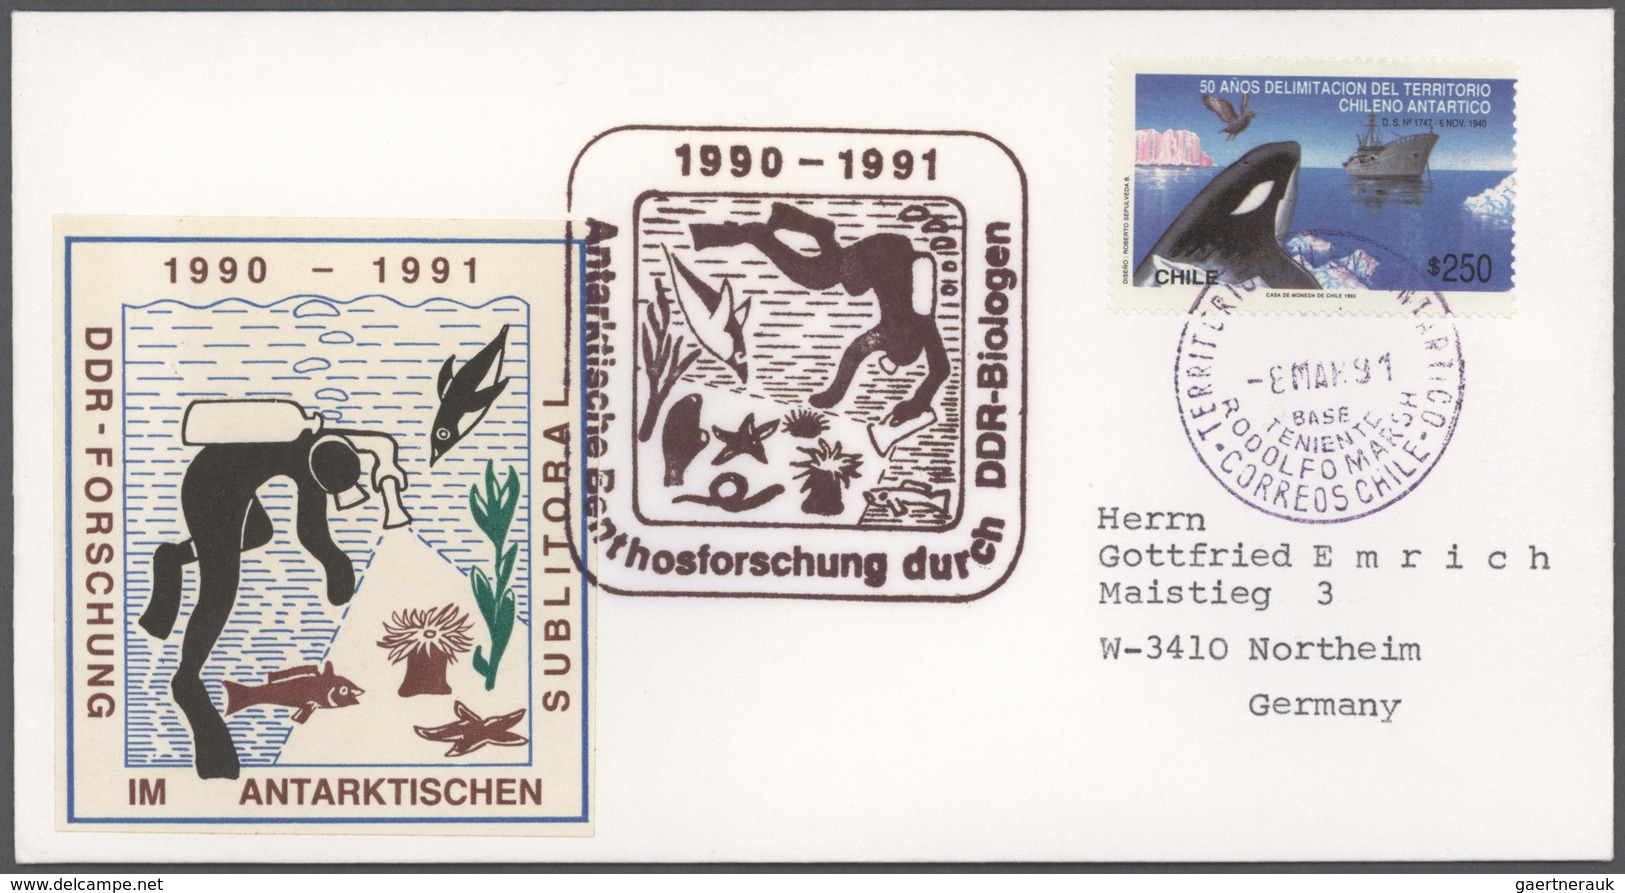 24951 Thematik: Antarktis / antarctic: 1969/1991, EAST GERMAN ANTARCTIC RESEARCH (incl. a few Arctic), acc